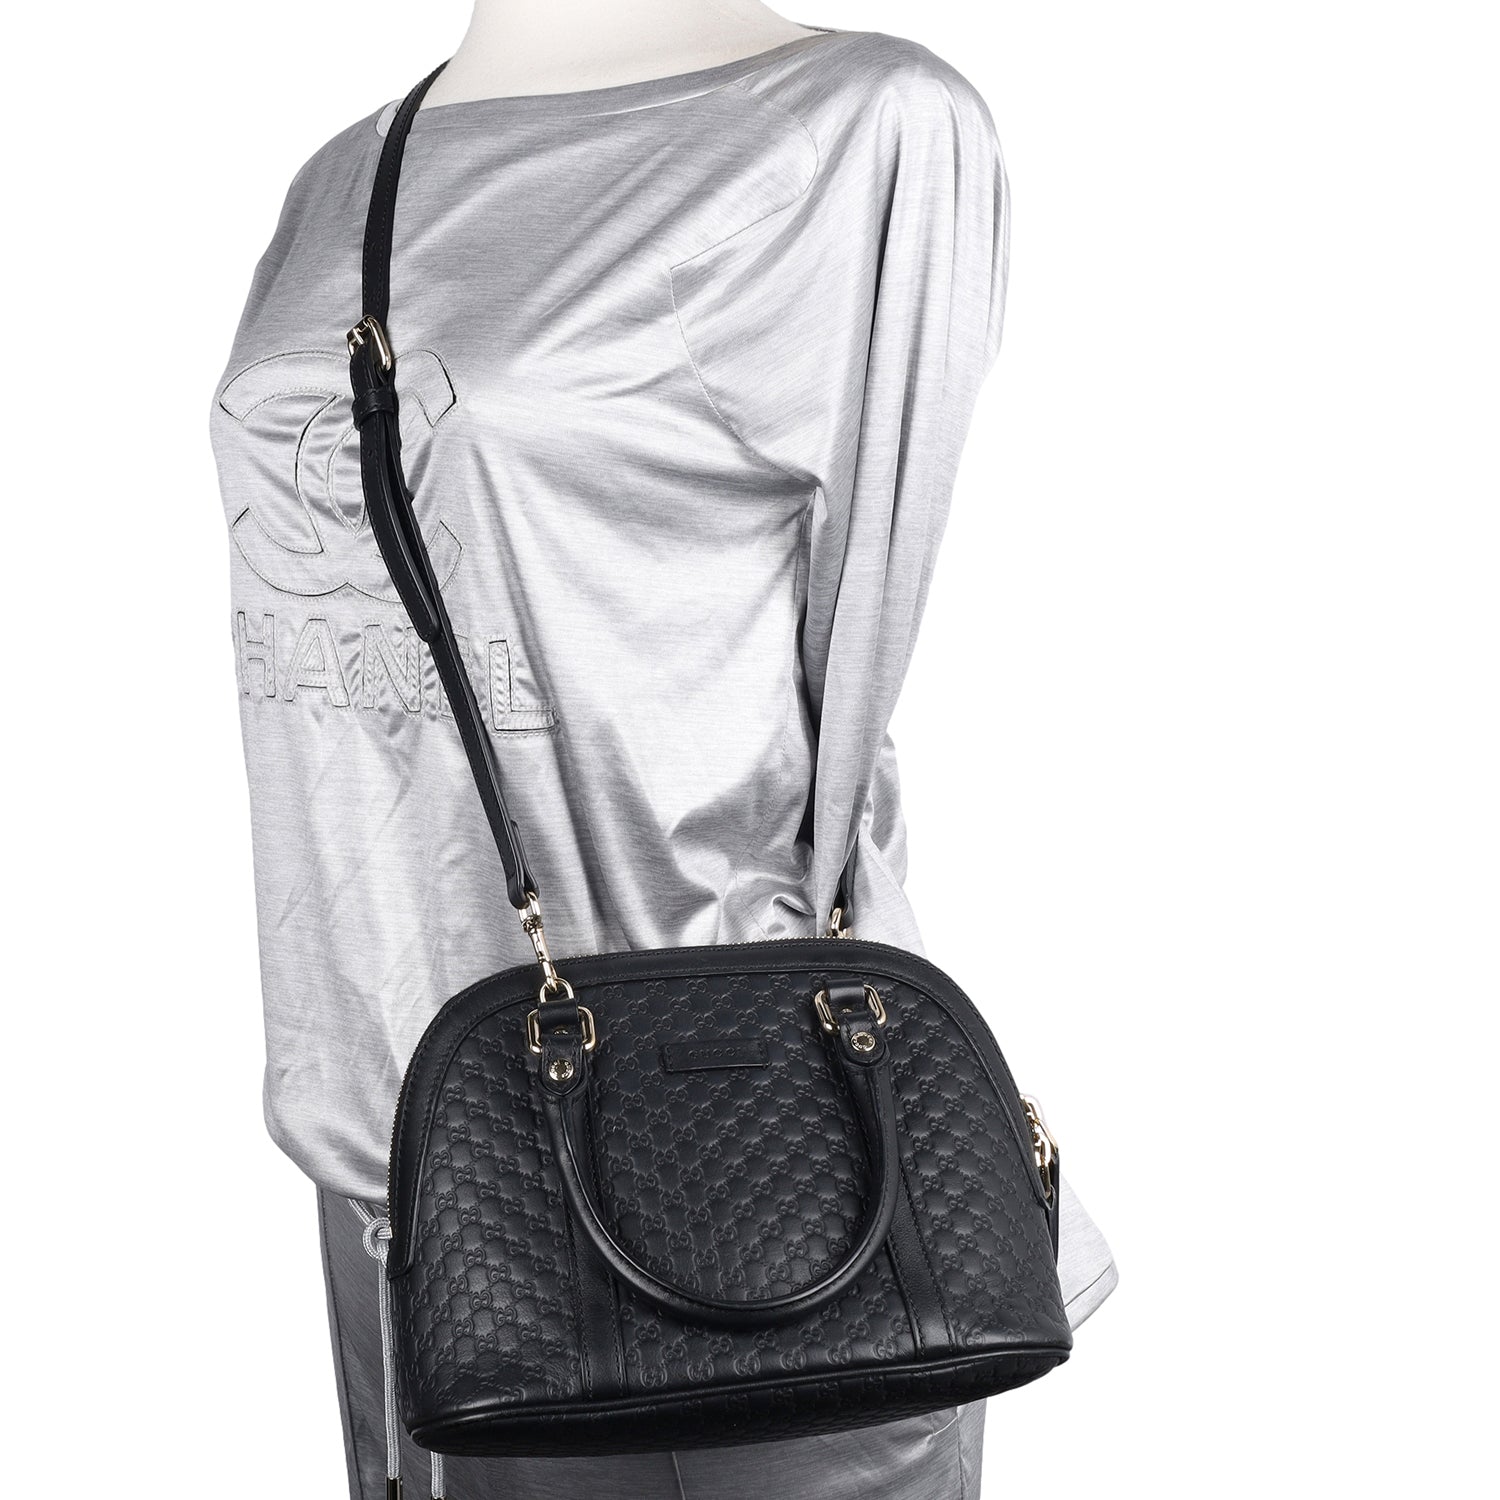 Gucci Black Leather Microguccissima Medium Dome Satchel Bag